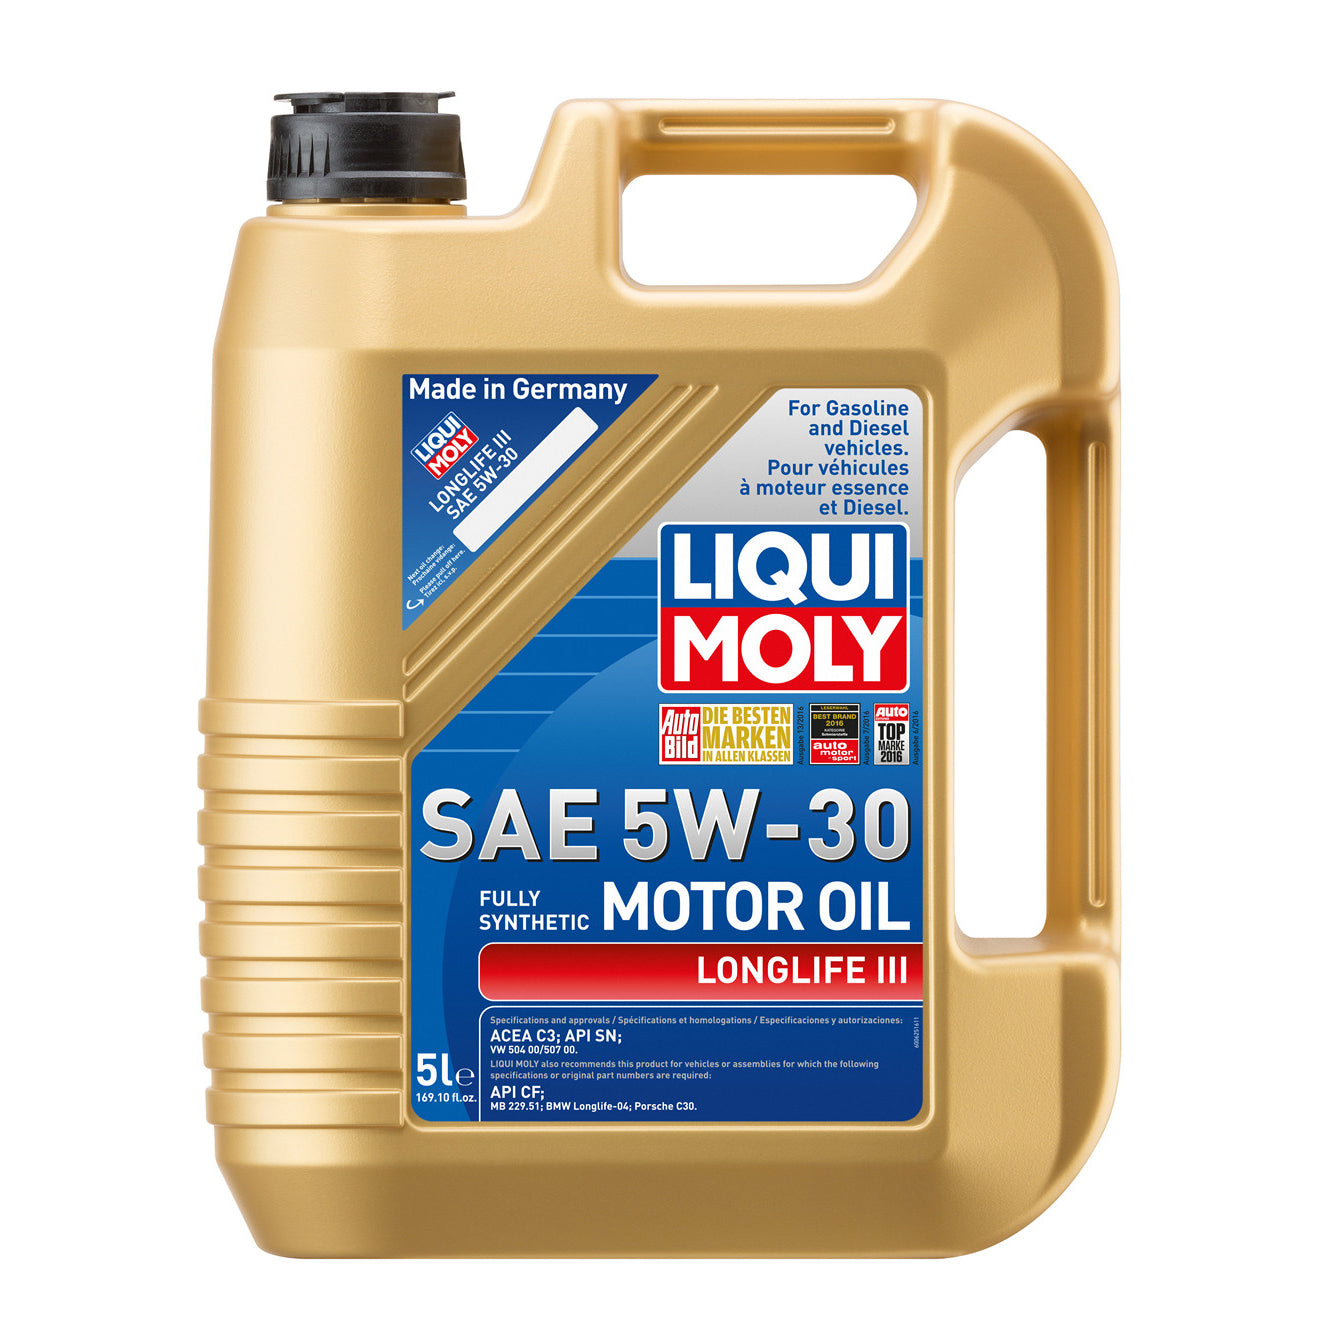 Liqui Moly Longlife III 5W-30